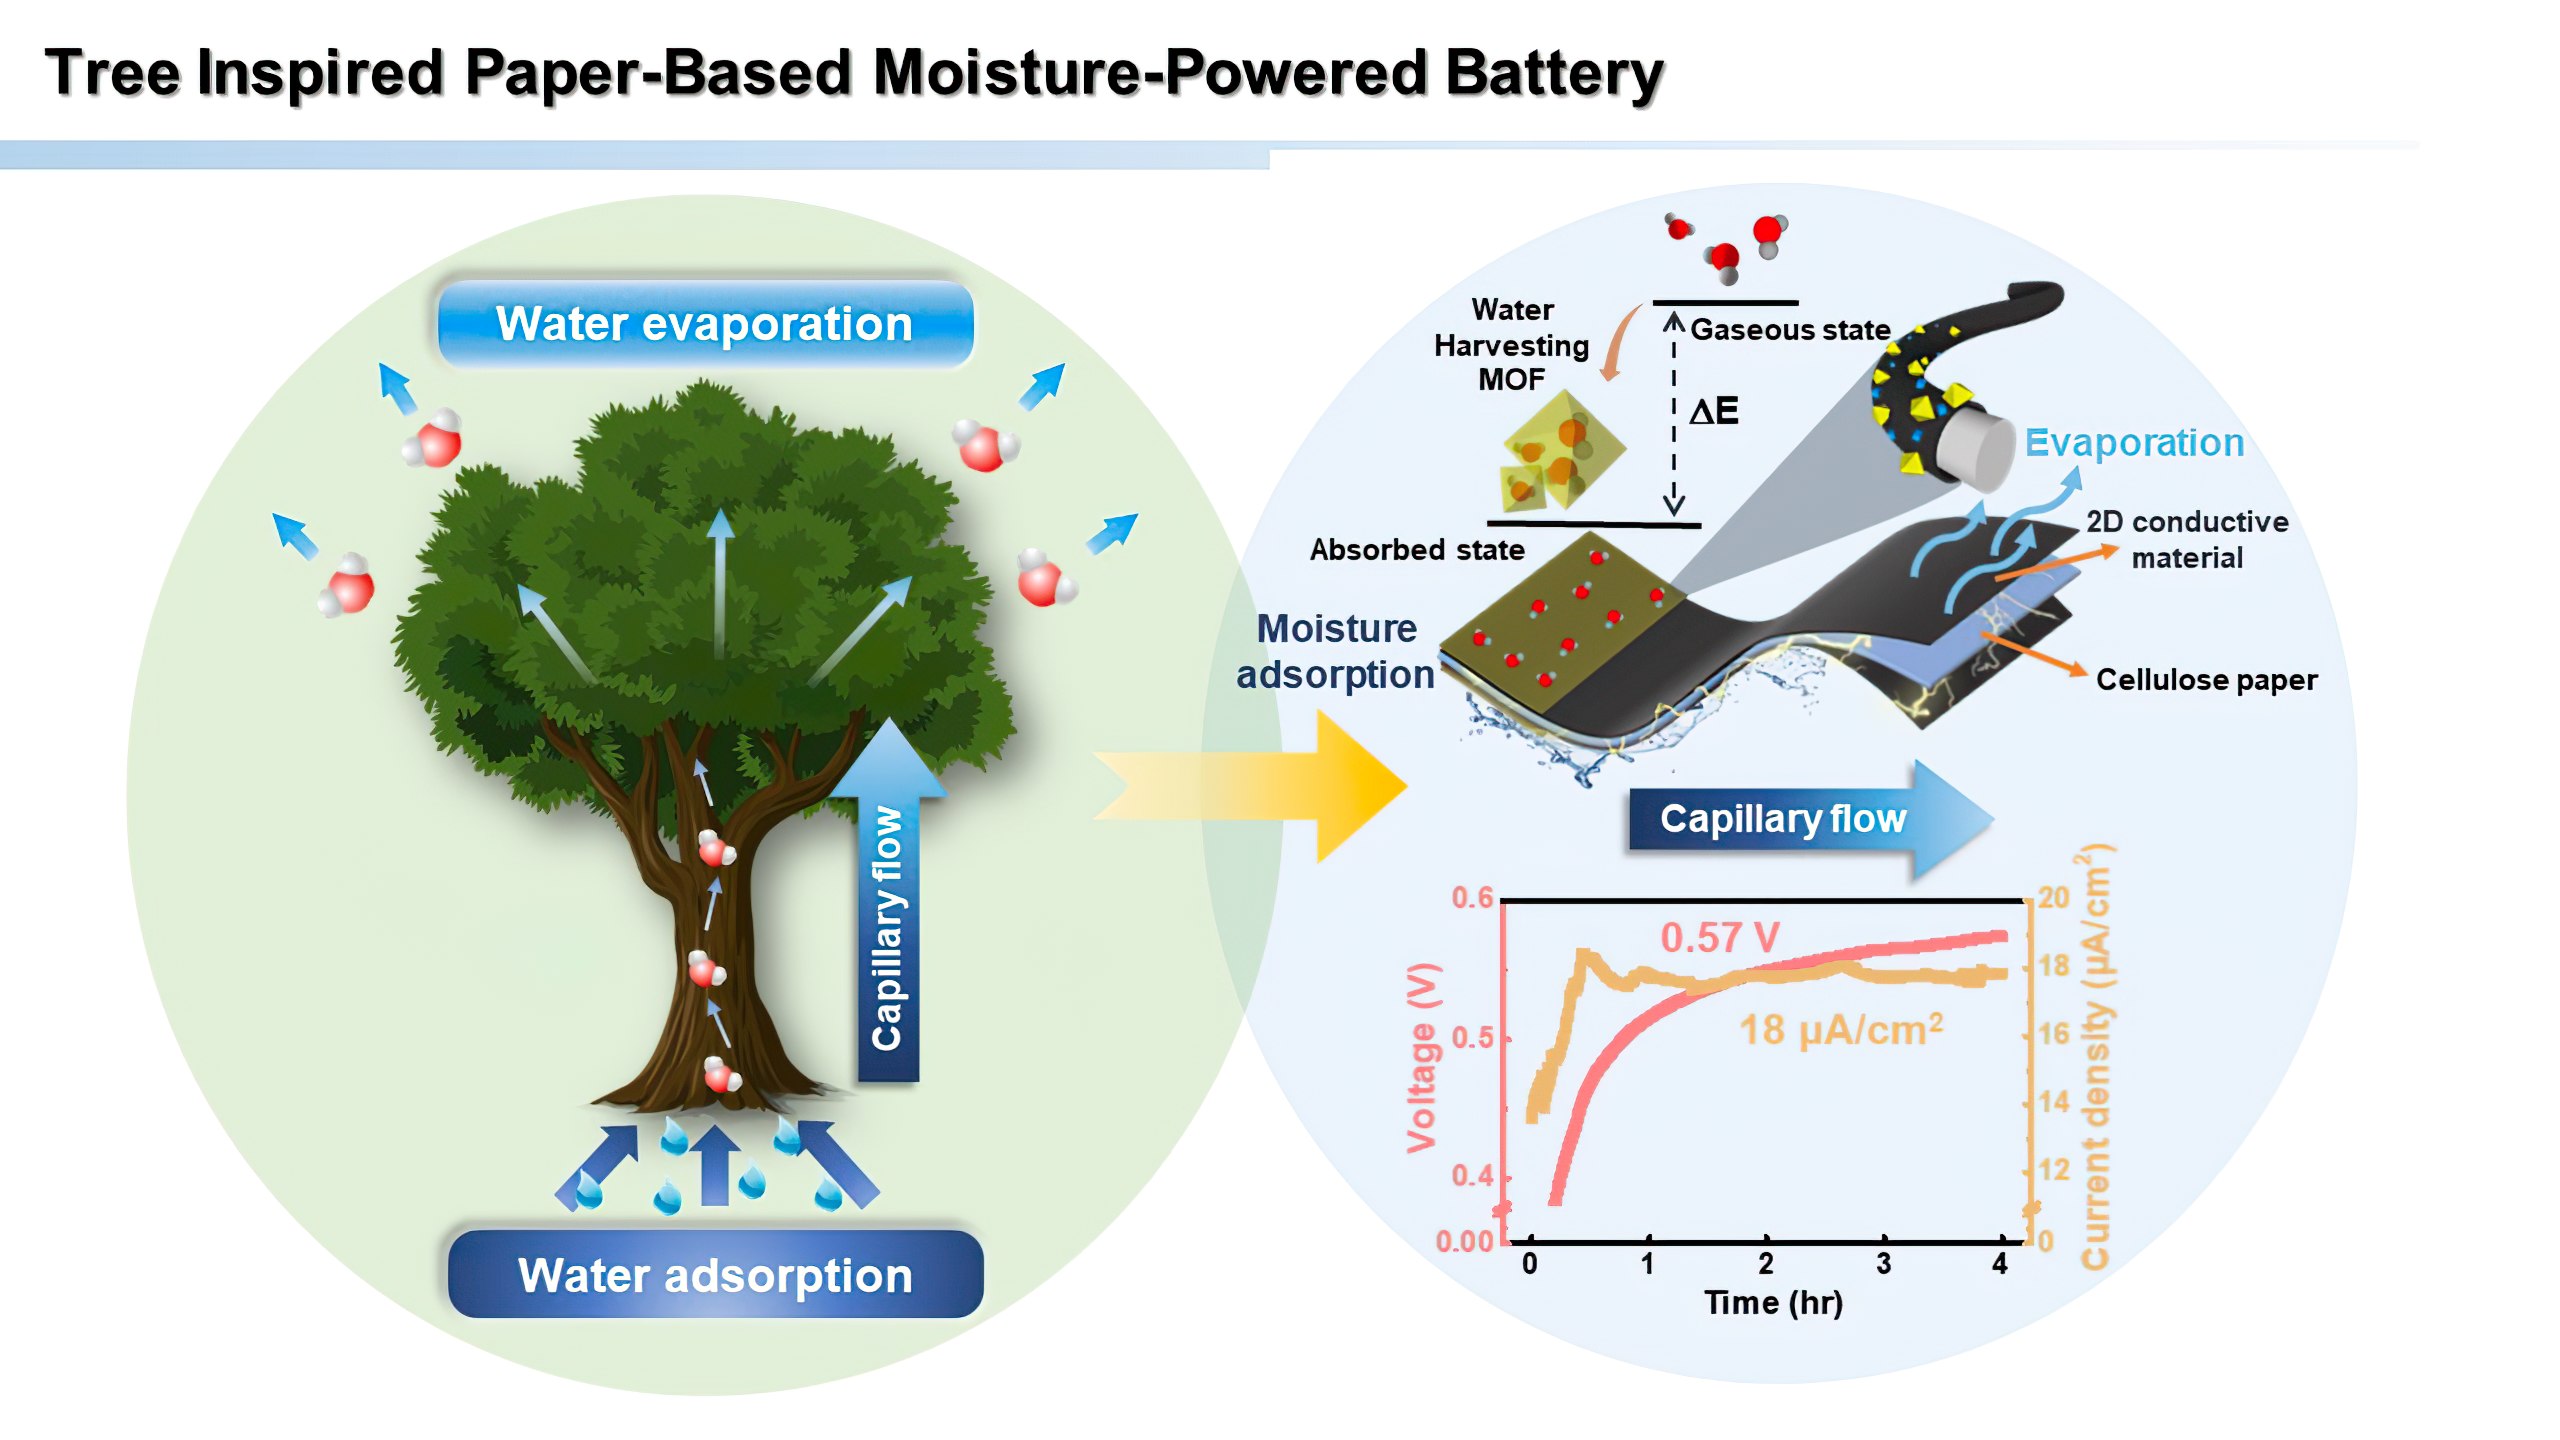 All-Paper-Based Moisture-Powered Battery